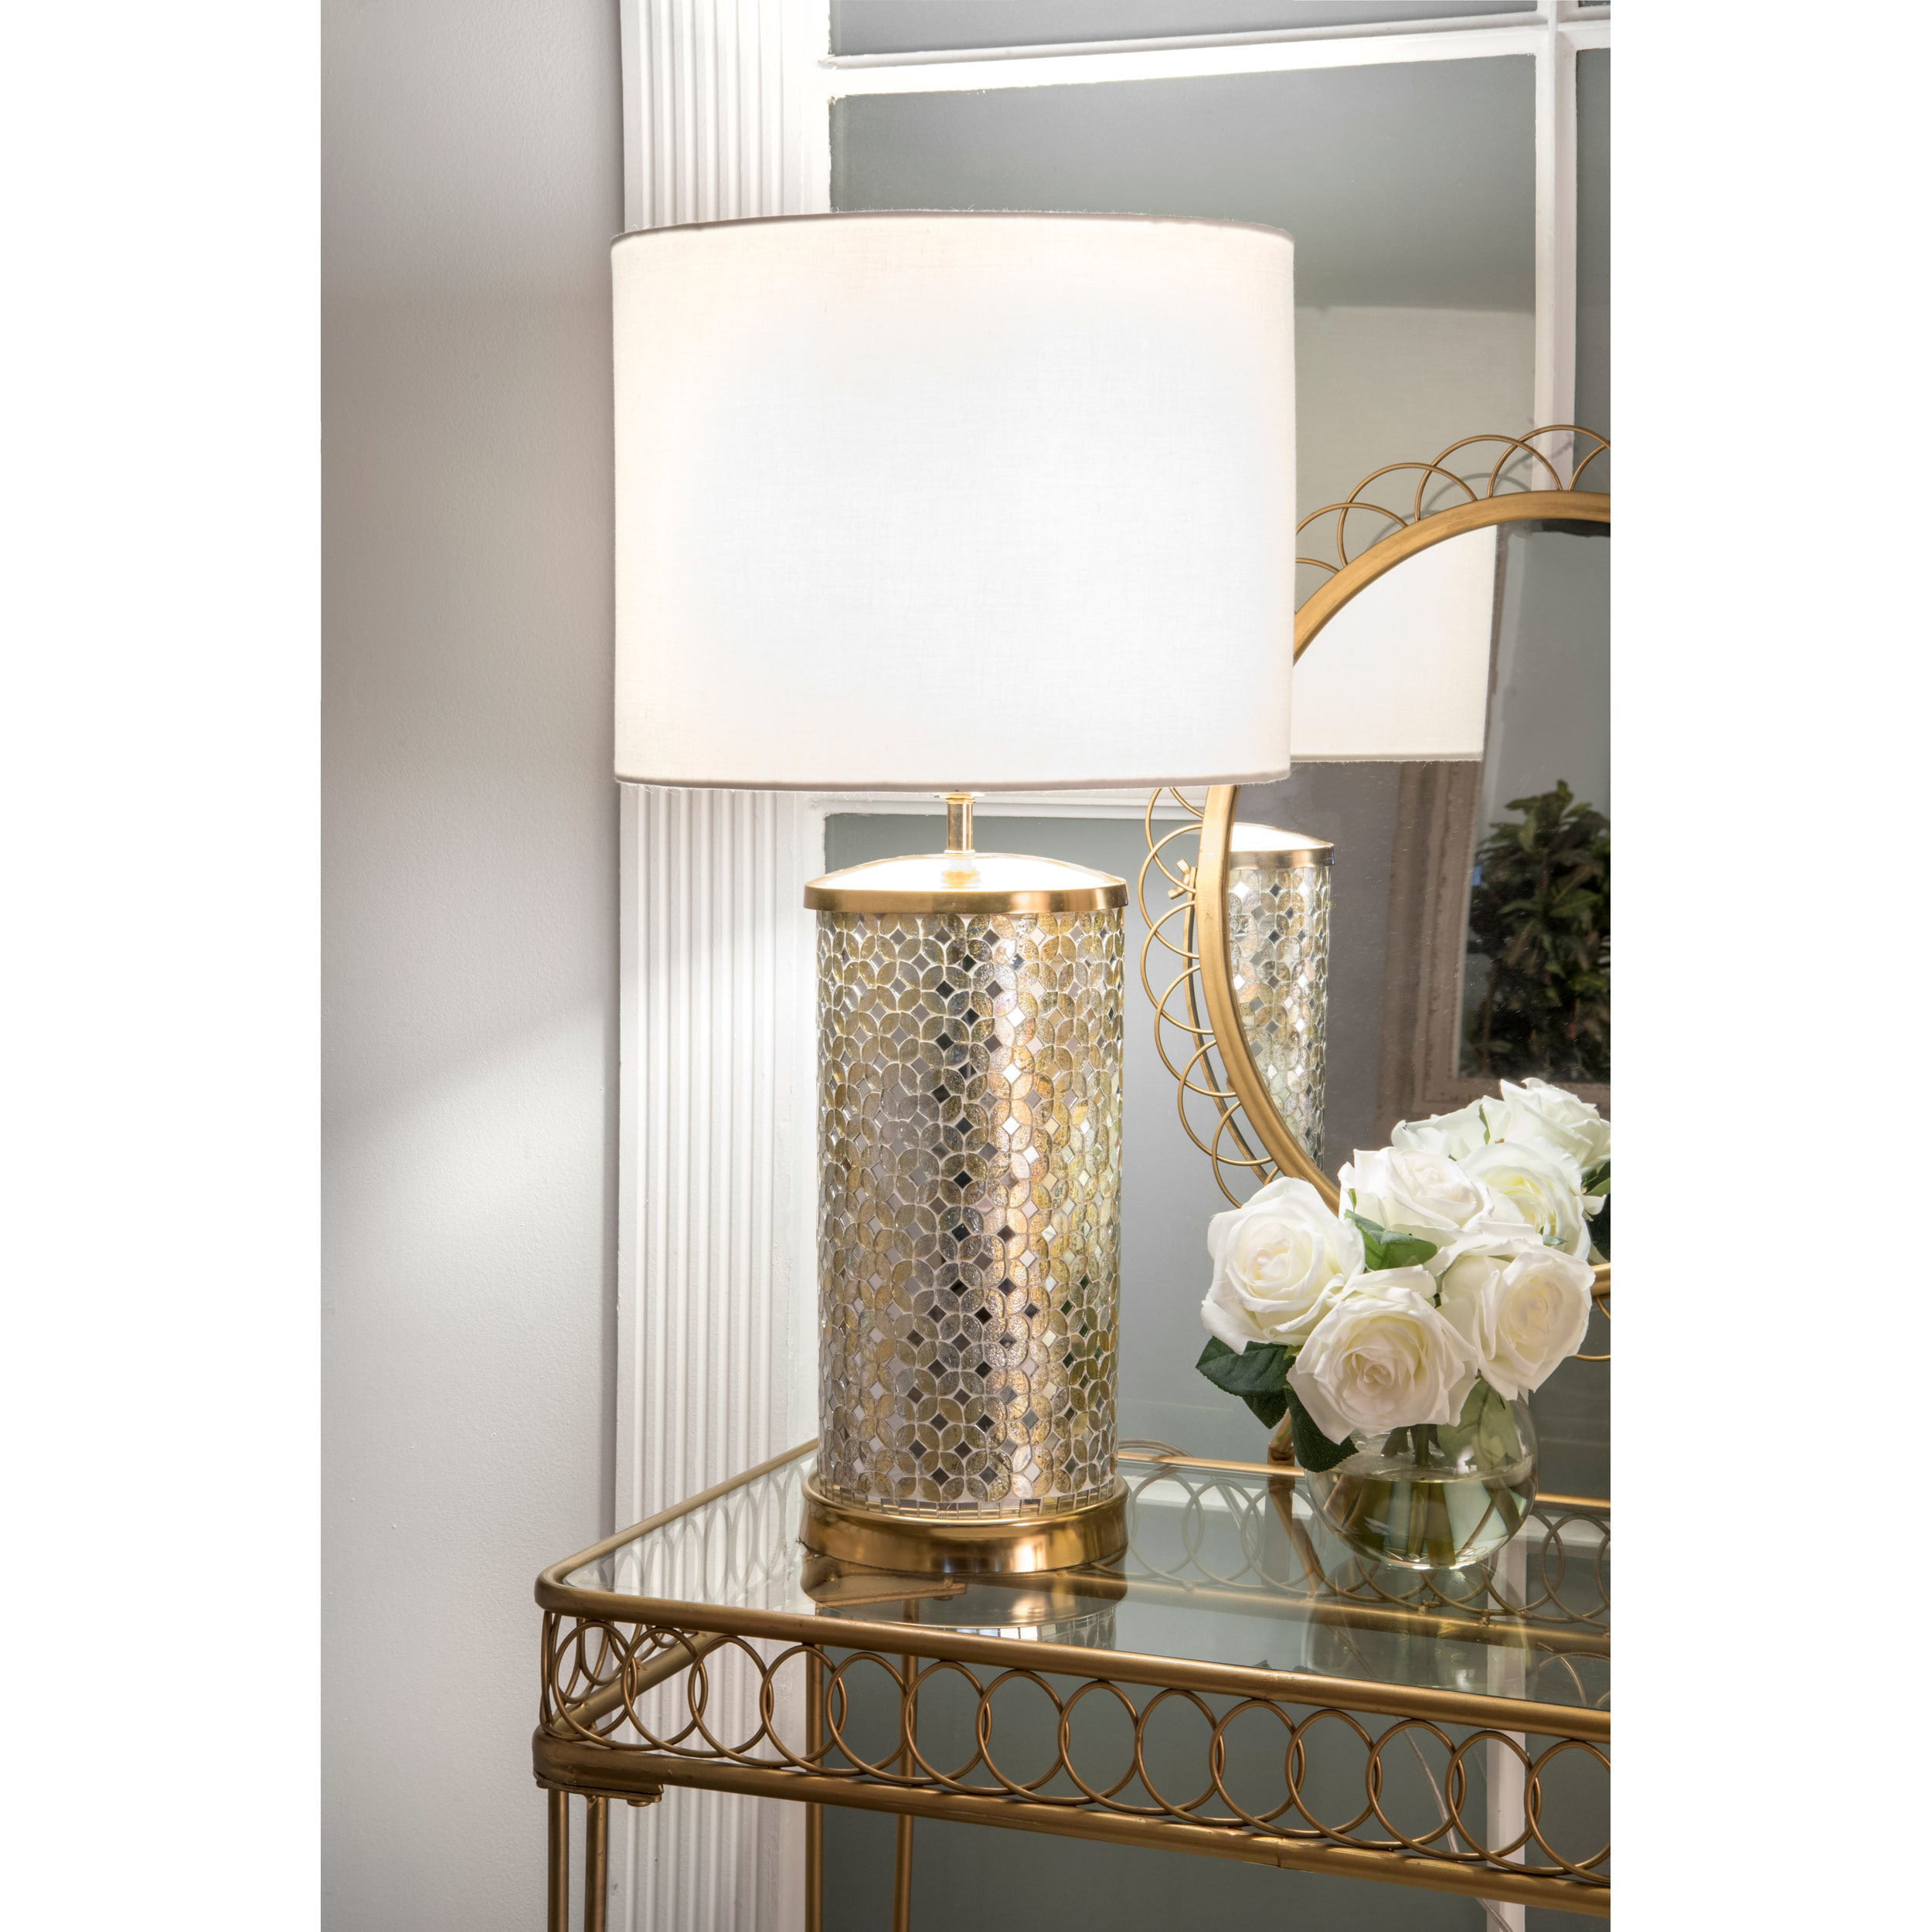 New Elegant Design Ava Mosaic Table Lamp Silver and Black Shade 